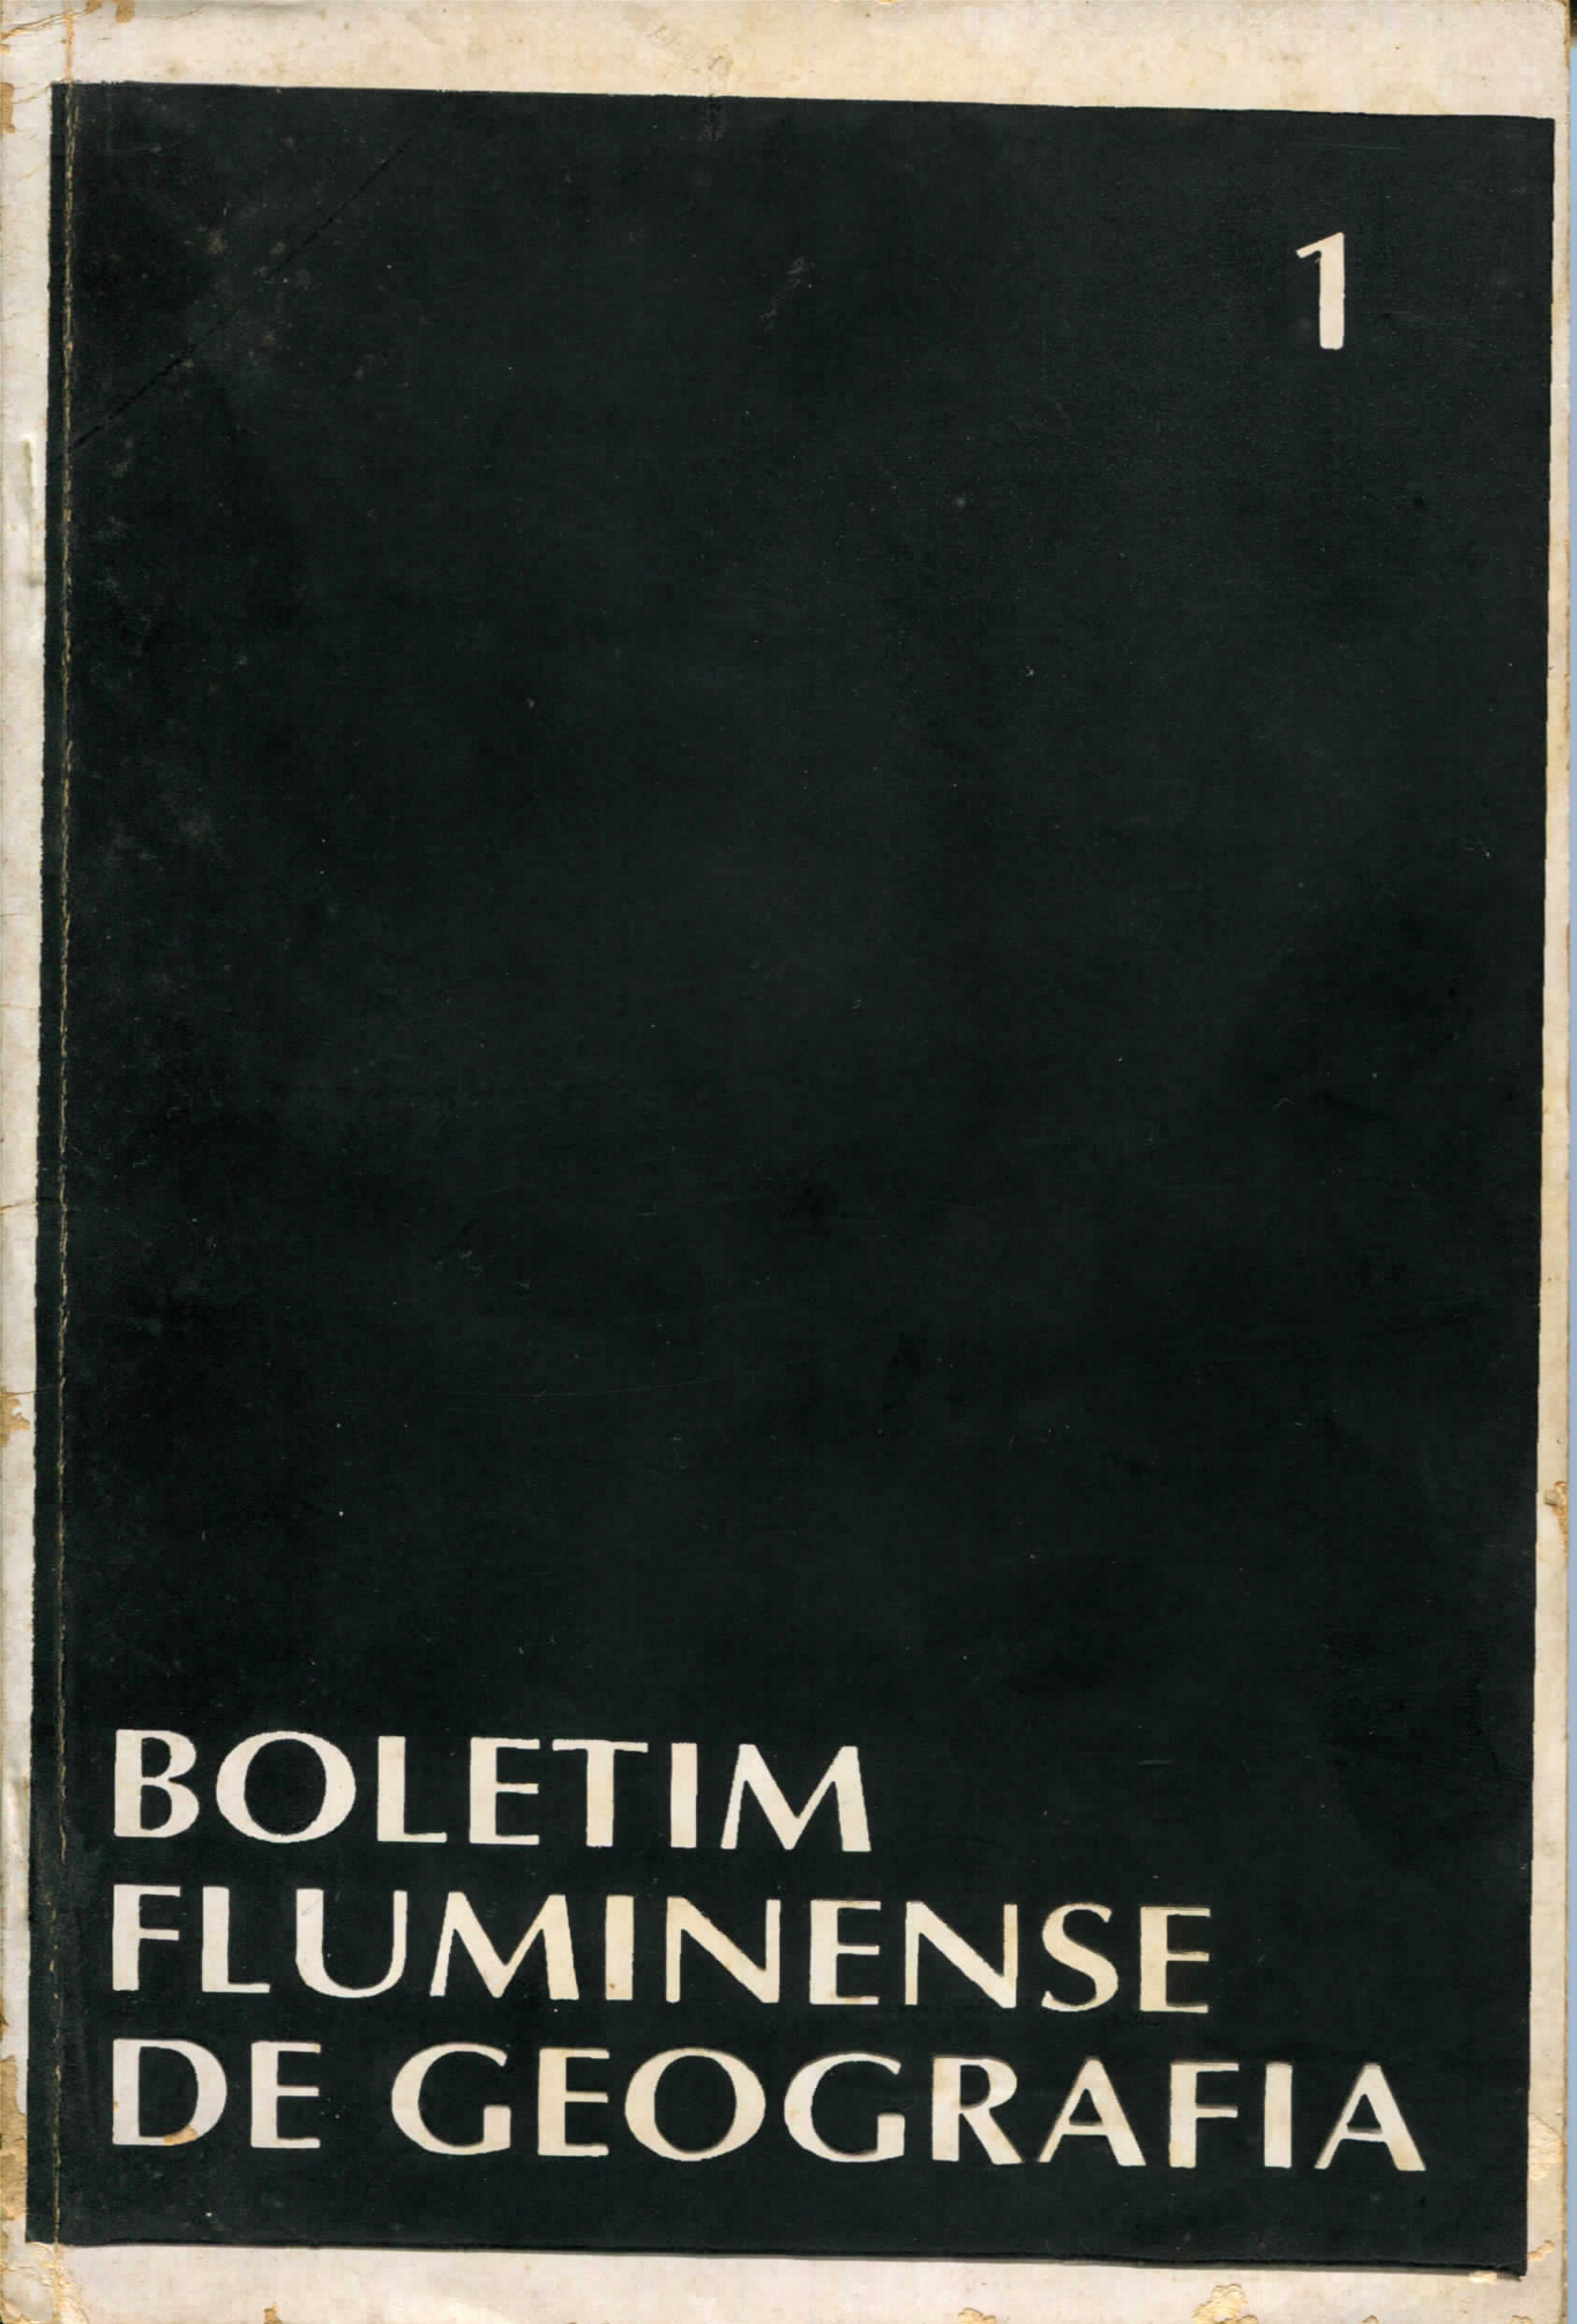 					Visualizar v. 1 n. 1 (1993): BOLETIM FLUMINENSE DE GEOGRAFIA
				